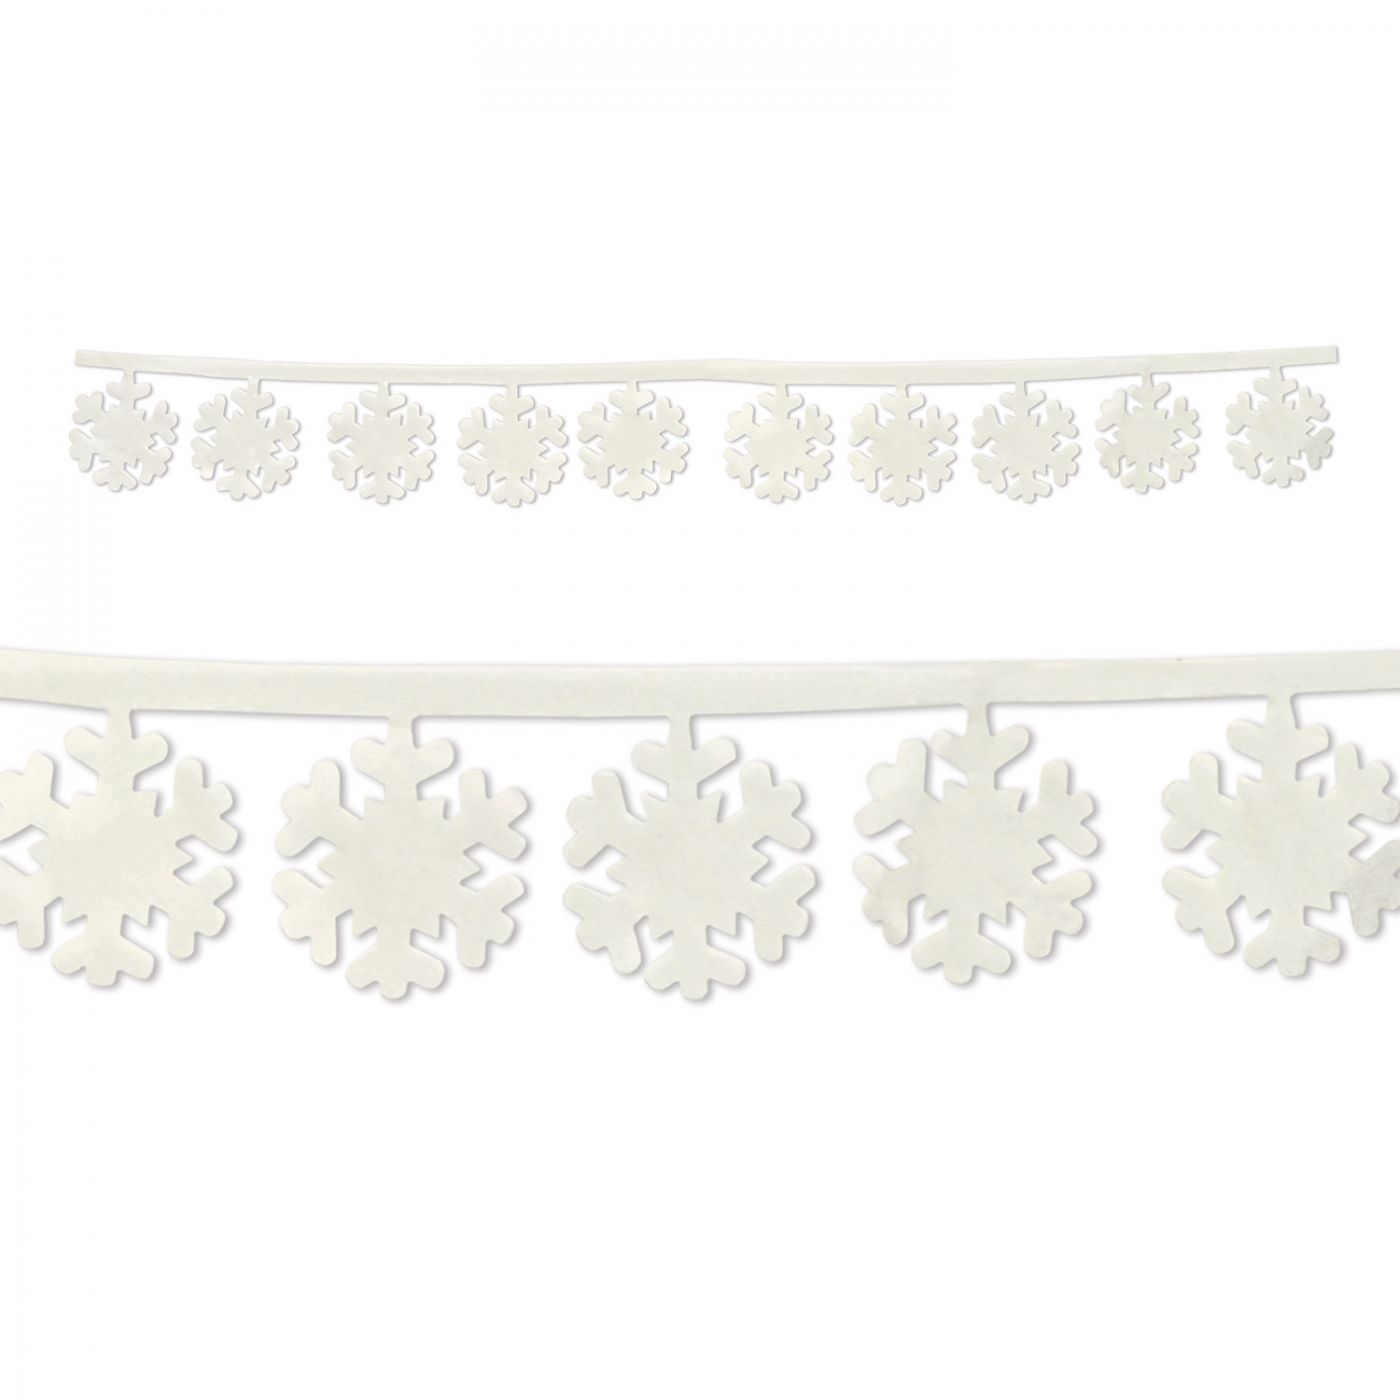 Fabric Snowflake Garlands (12) image